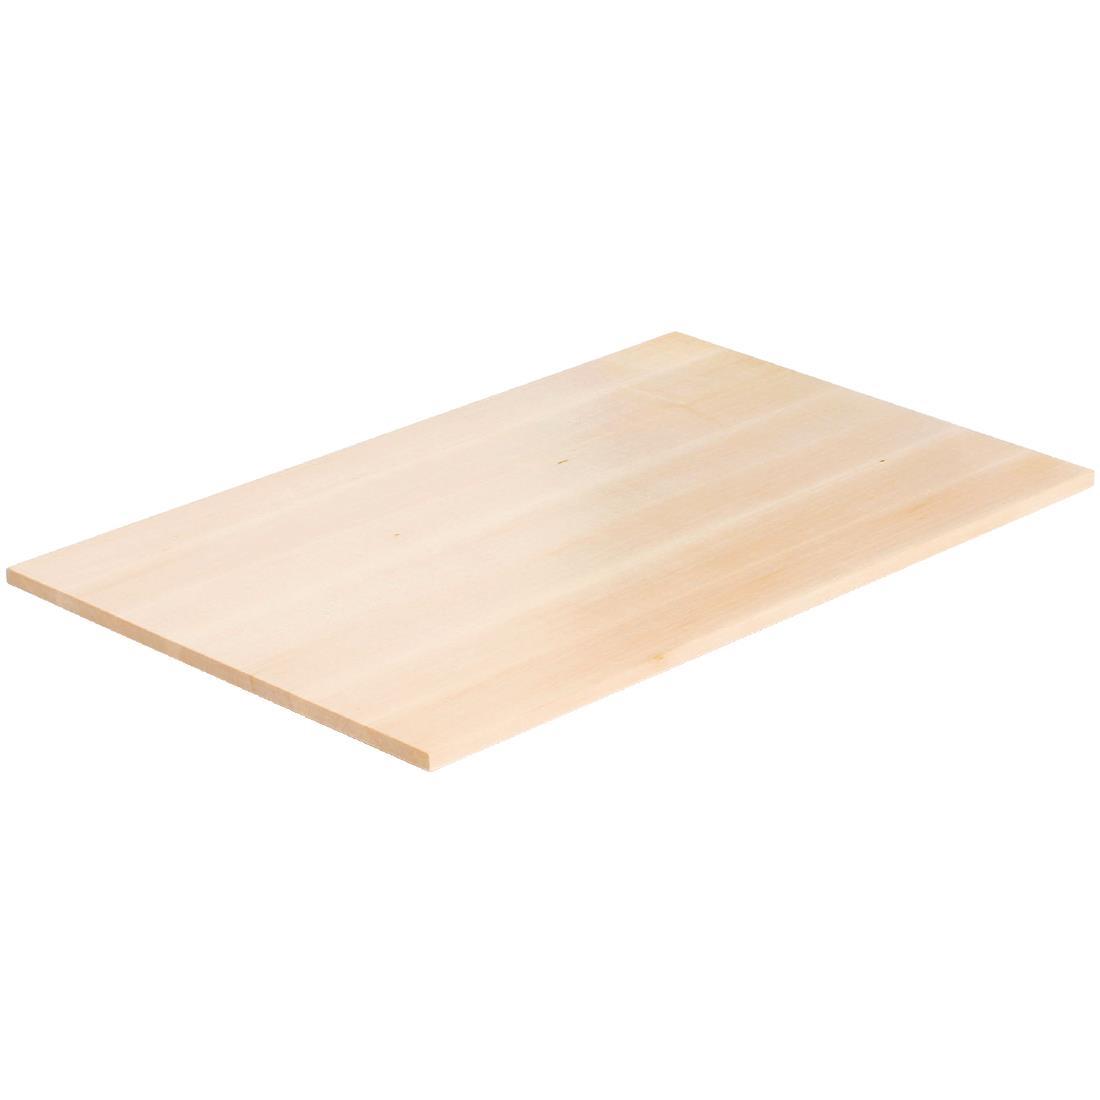 APS Frames Maple Wood 1/1 GN Cutting Board - Each - GC907 - 1